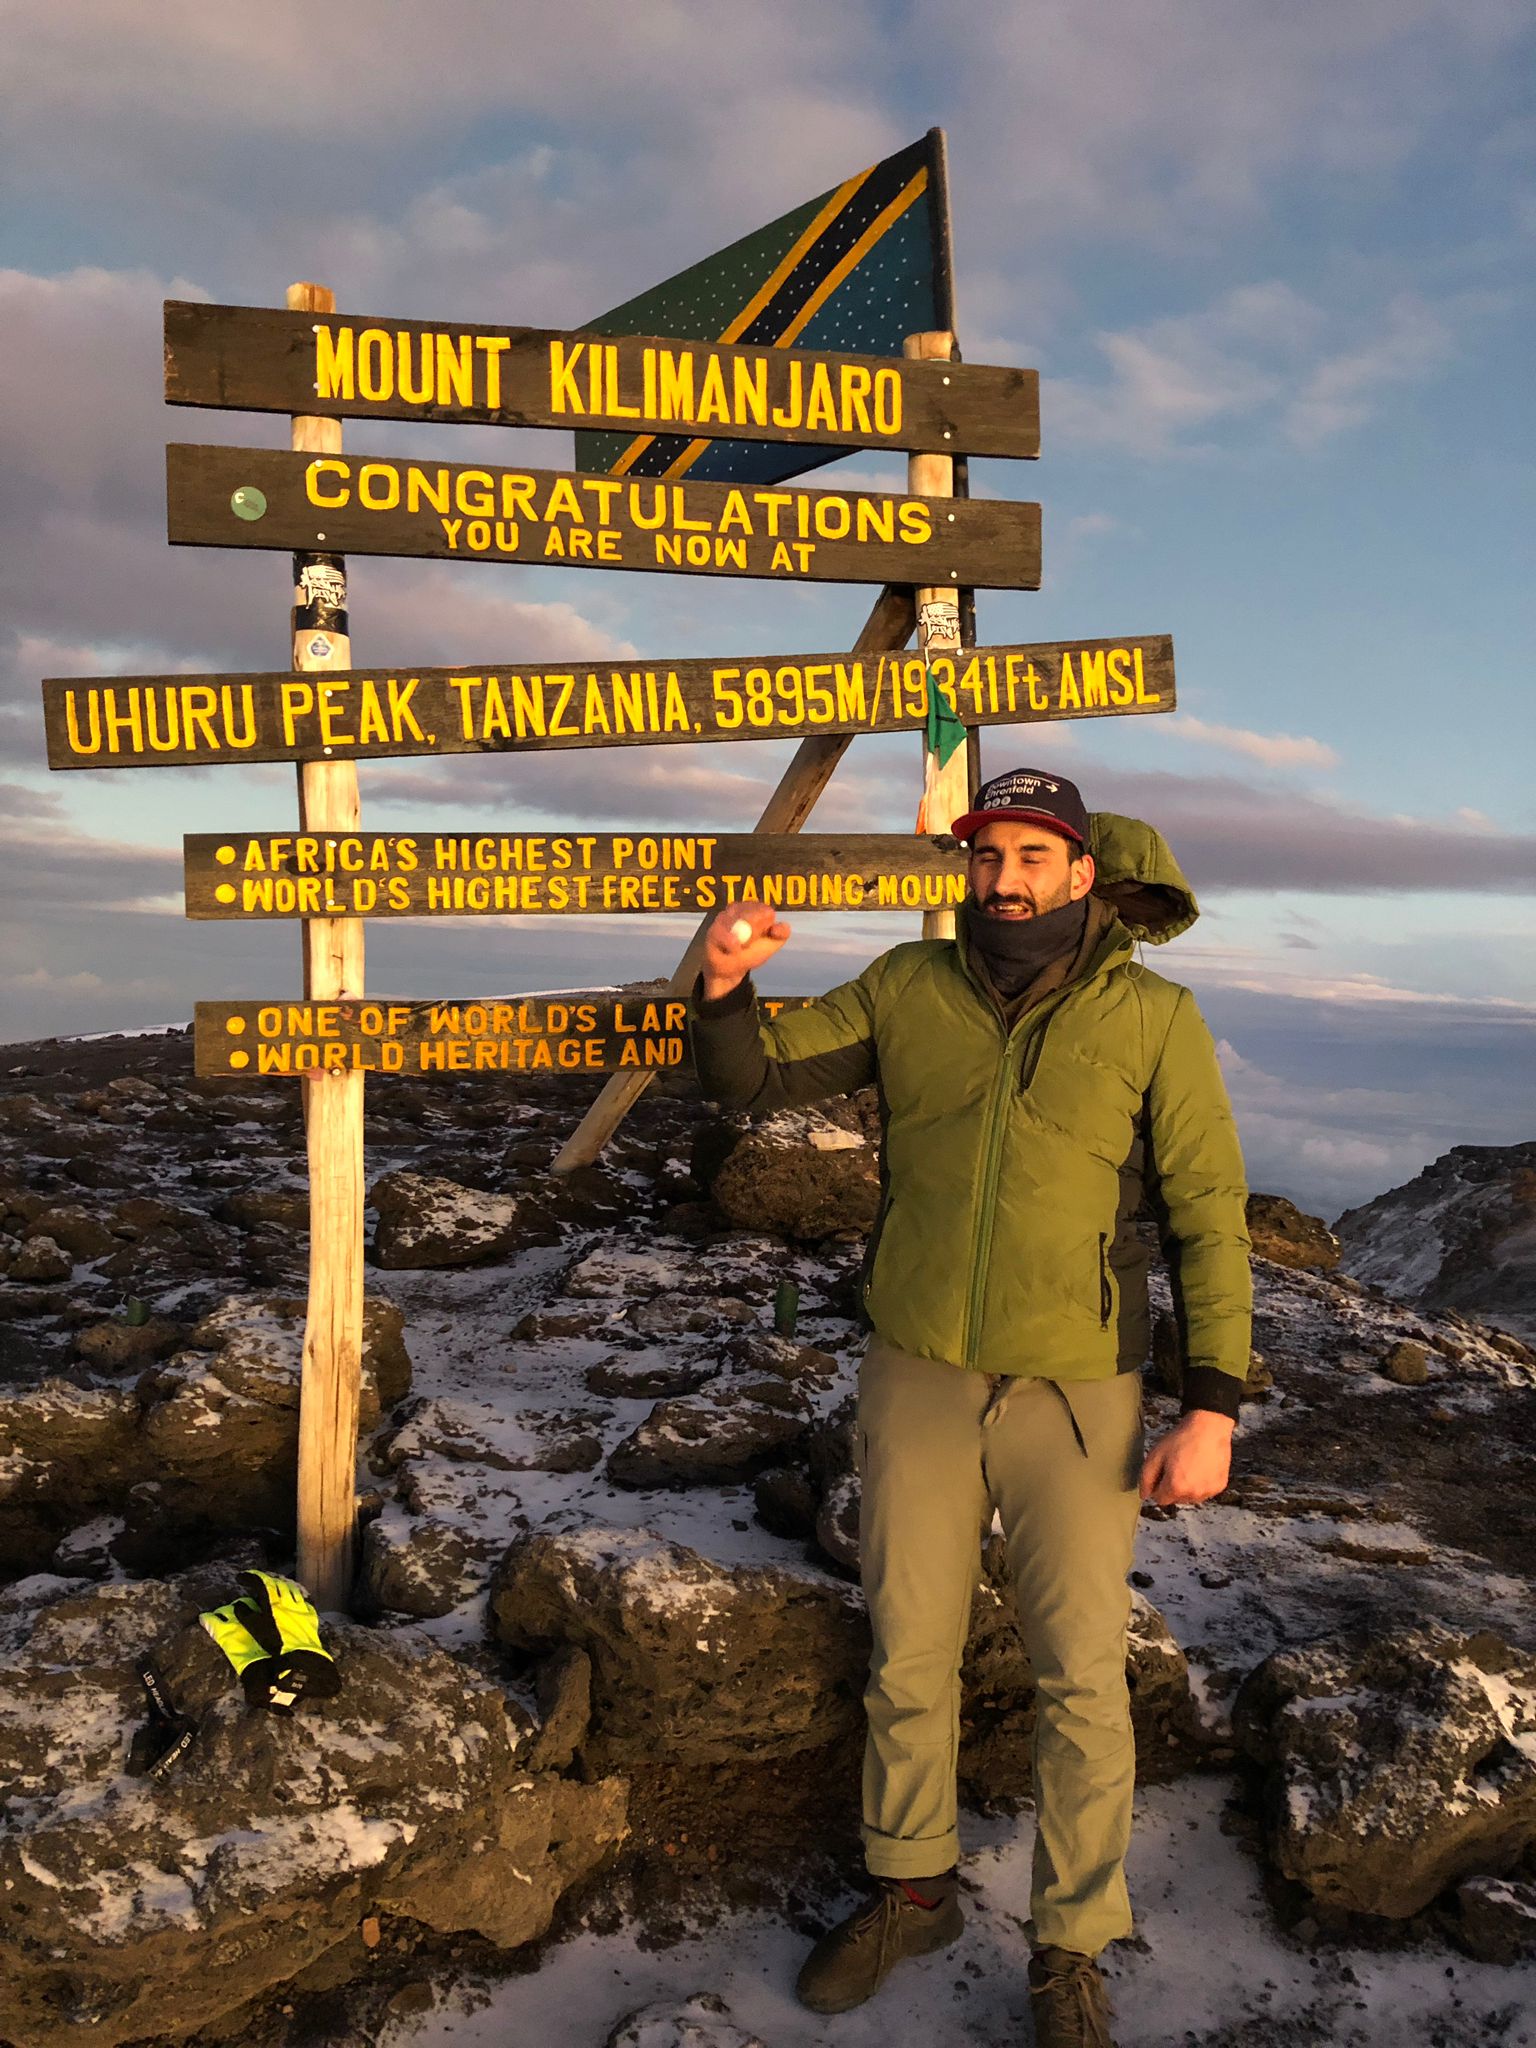 The beautiful Kilimanjaro Lemosho route